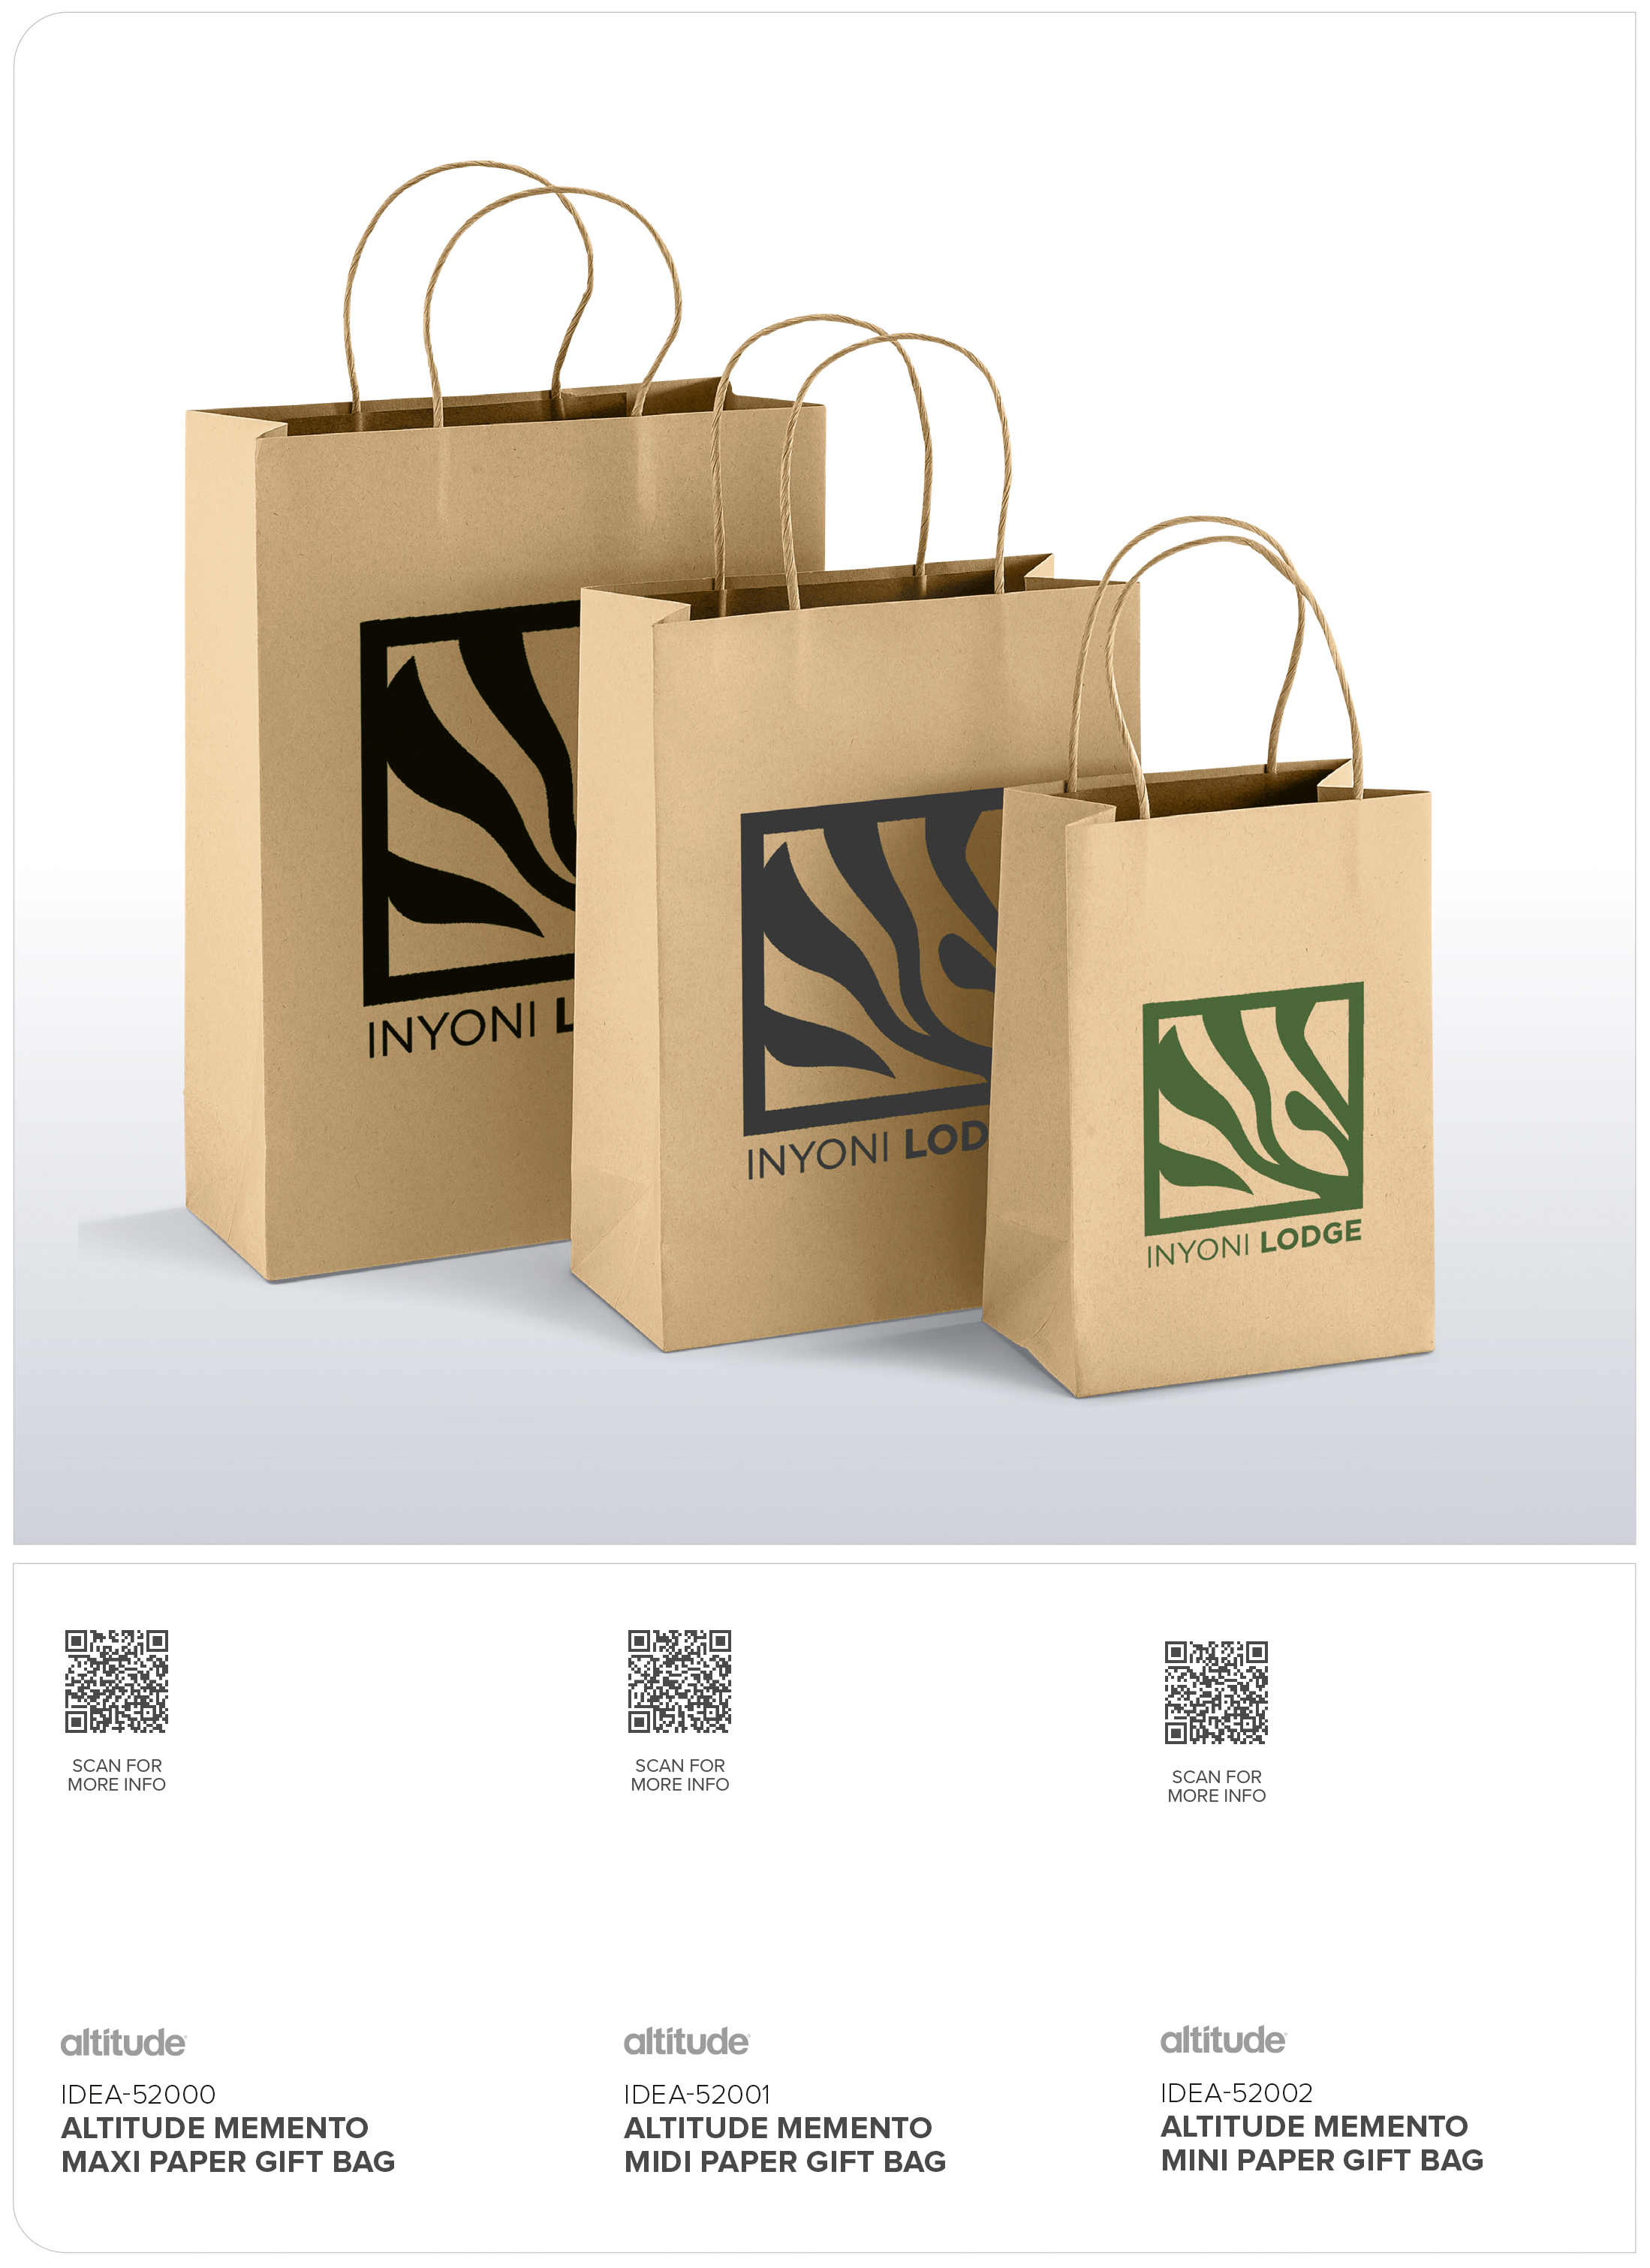 IDEA-52001 - Altitude Memento Midi Paper Gift Bag - Catalogue Image